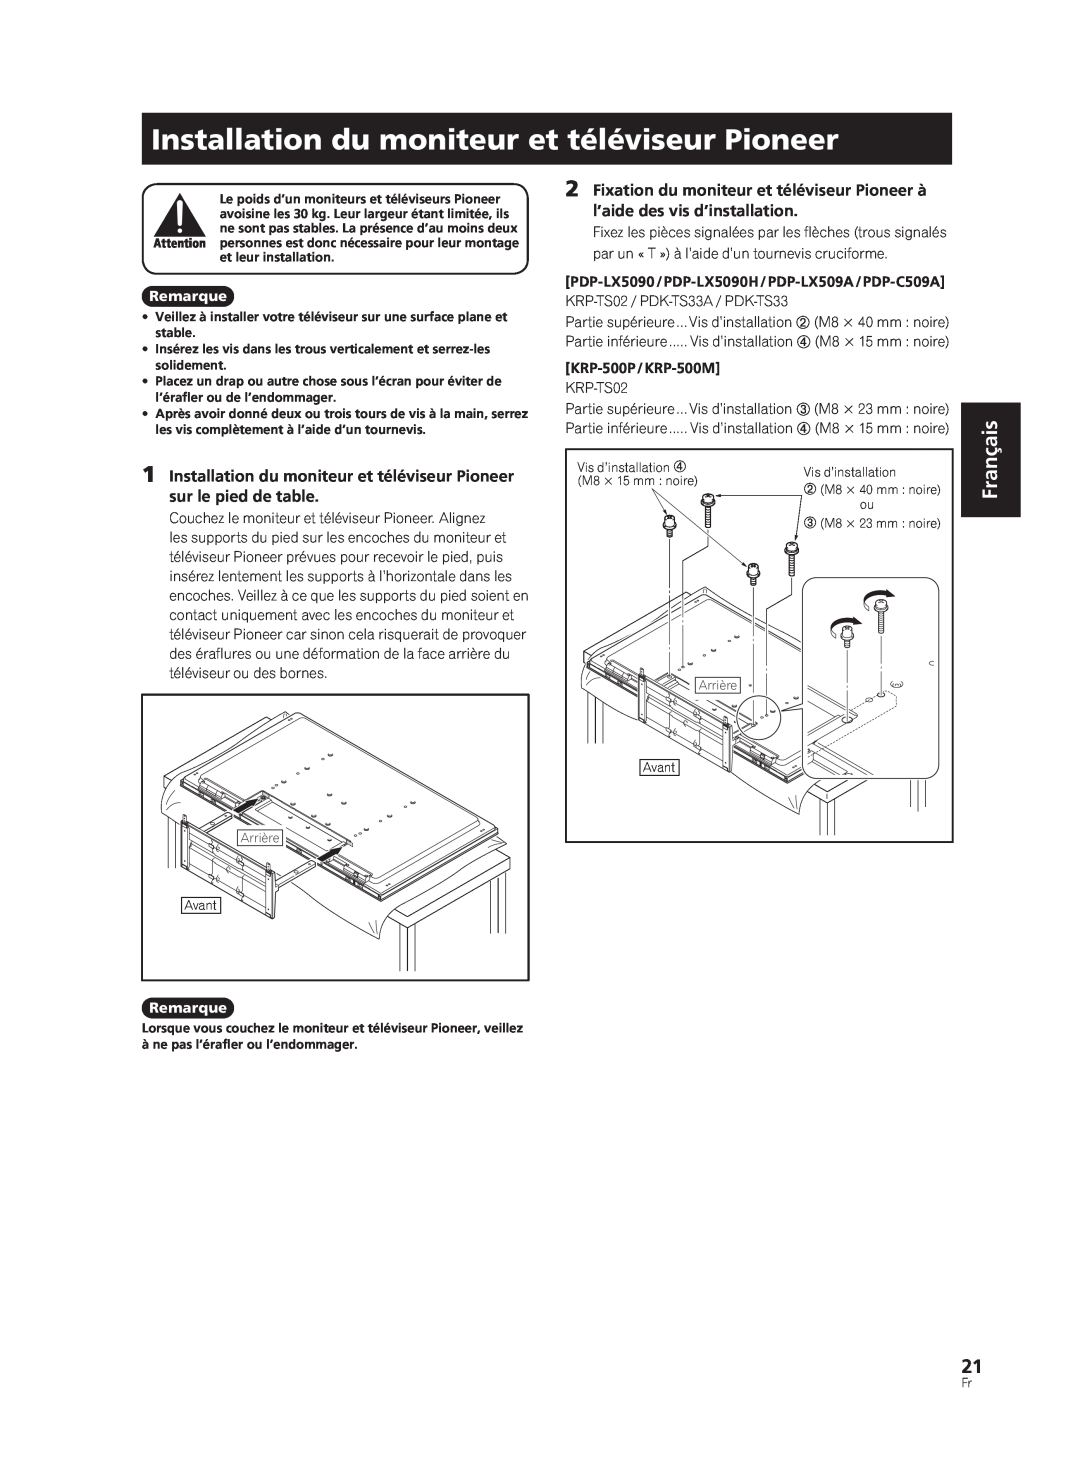 Pioneer manual Installation du moniteur et téléviseur Pioneer, Français, KRP-TS02 / PDK-TS33A / PDK-TS33 